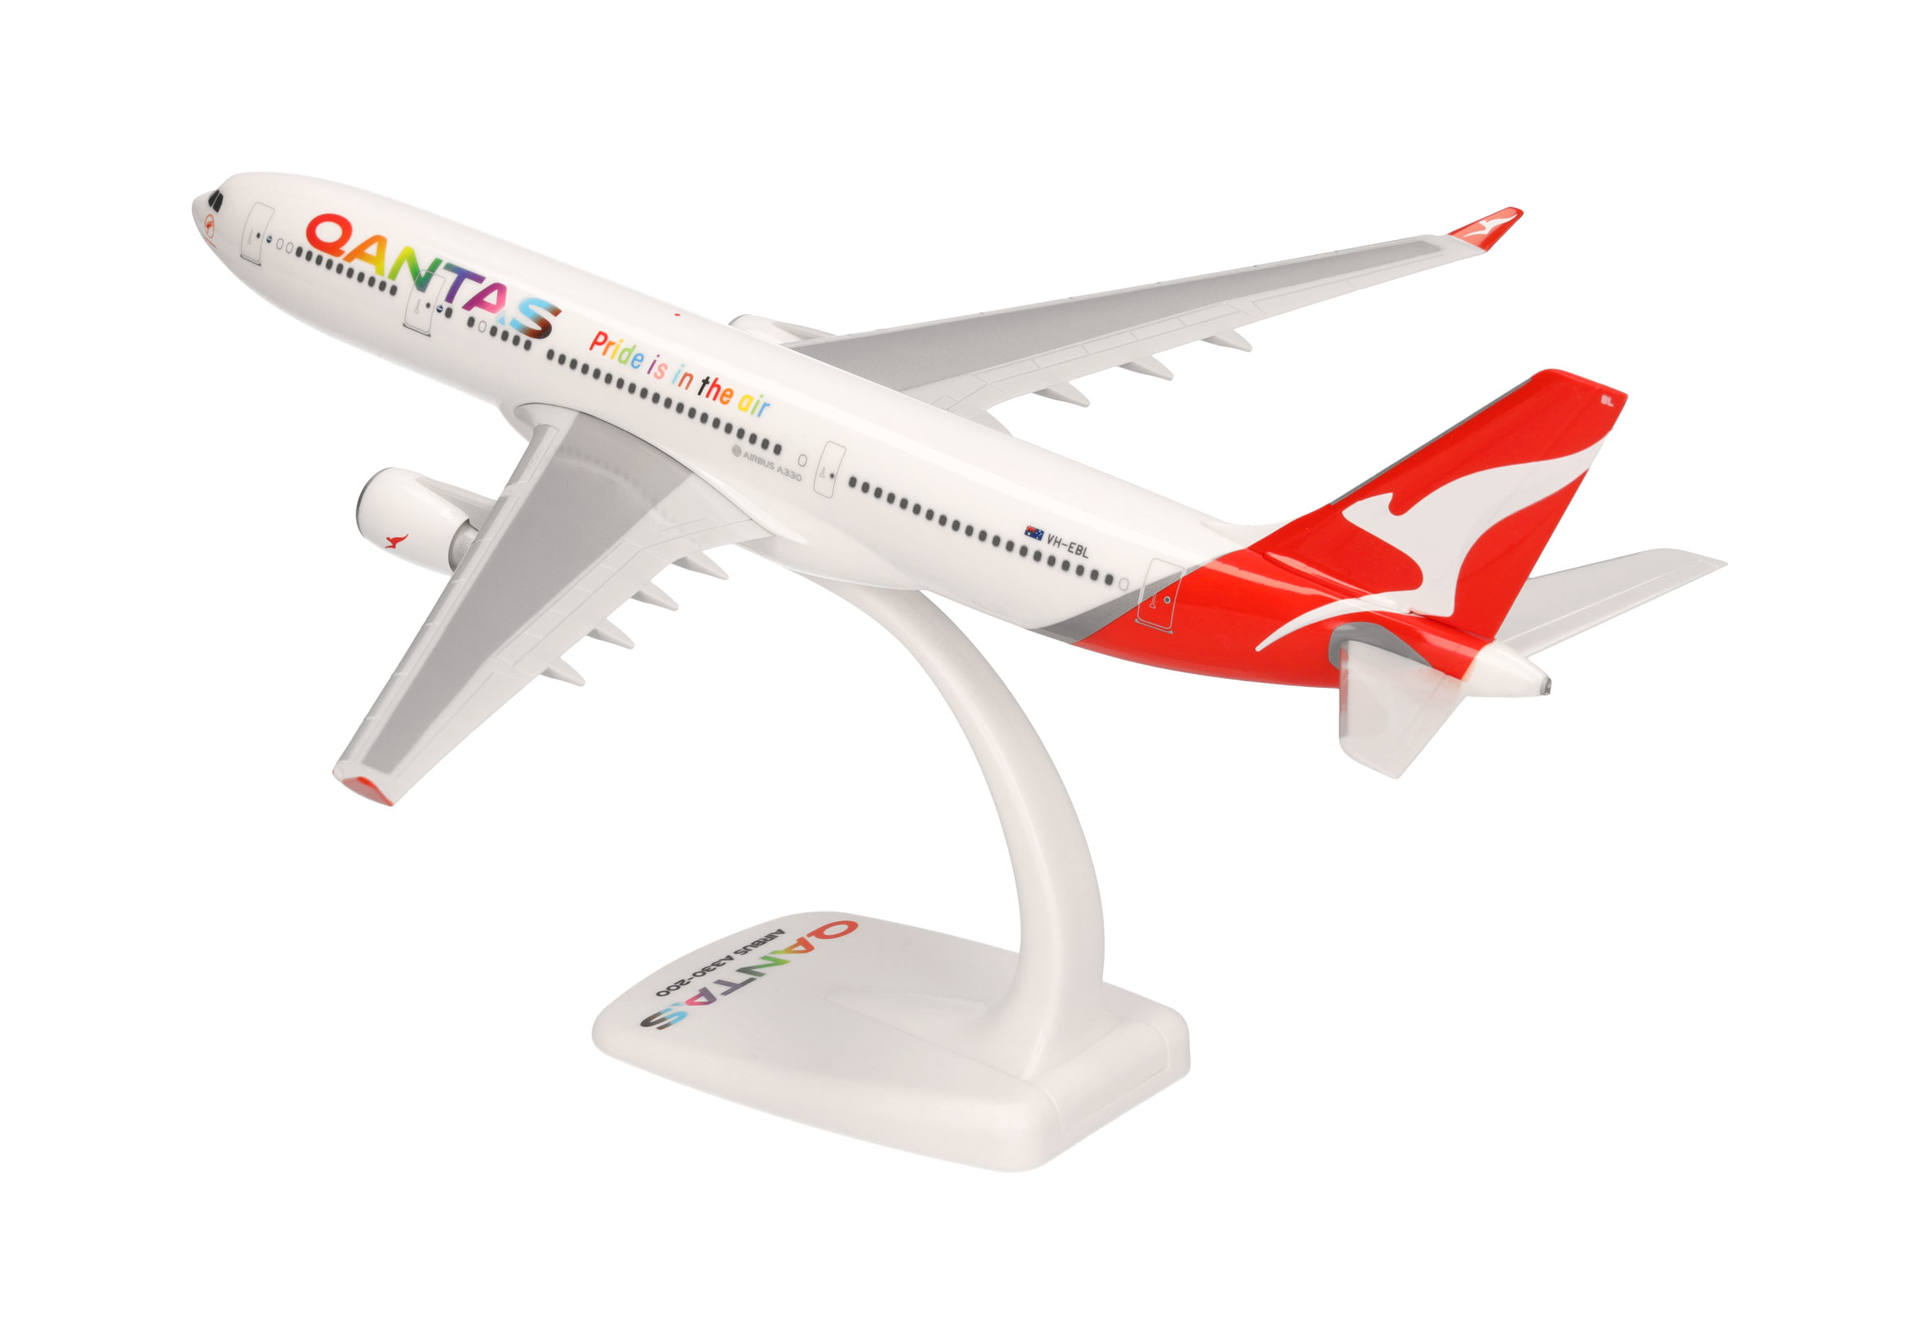 Qantas Airbus A330-200 "Pride is in the Air"